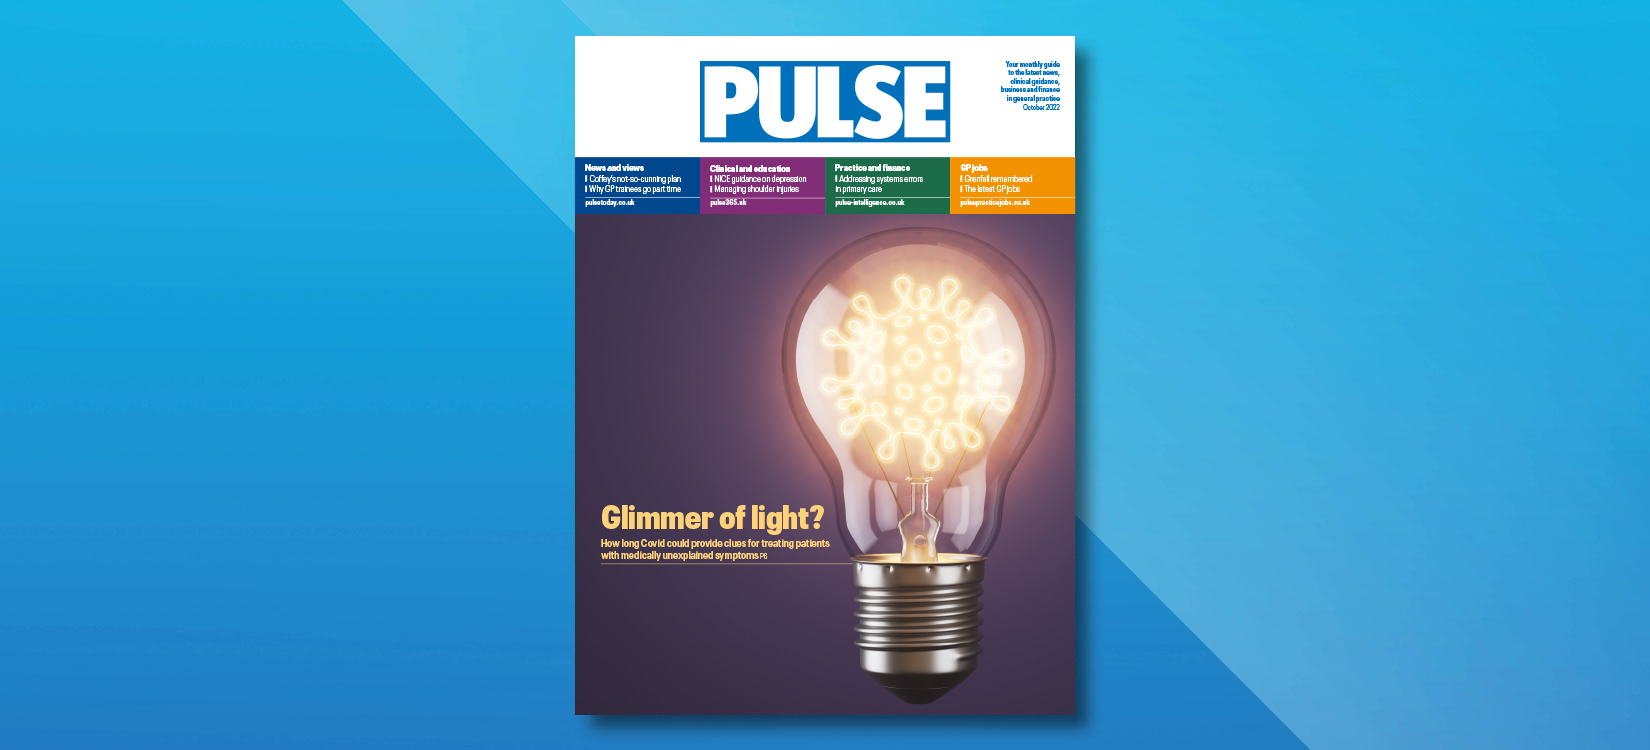 Pulse: Glimmer of light?